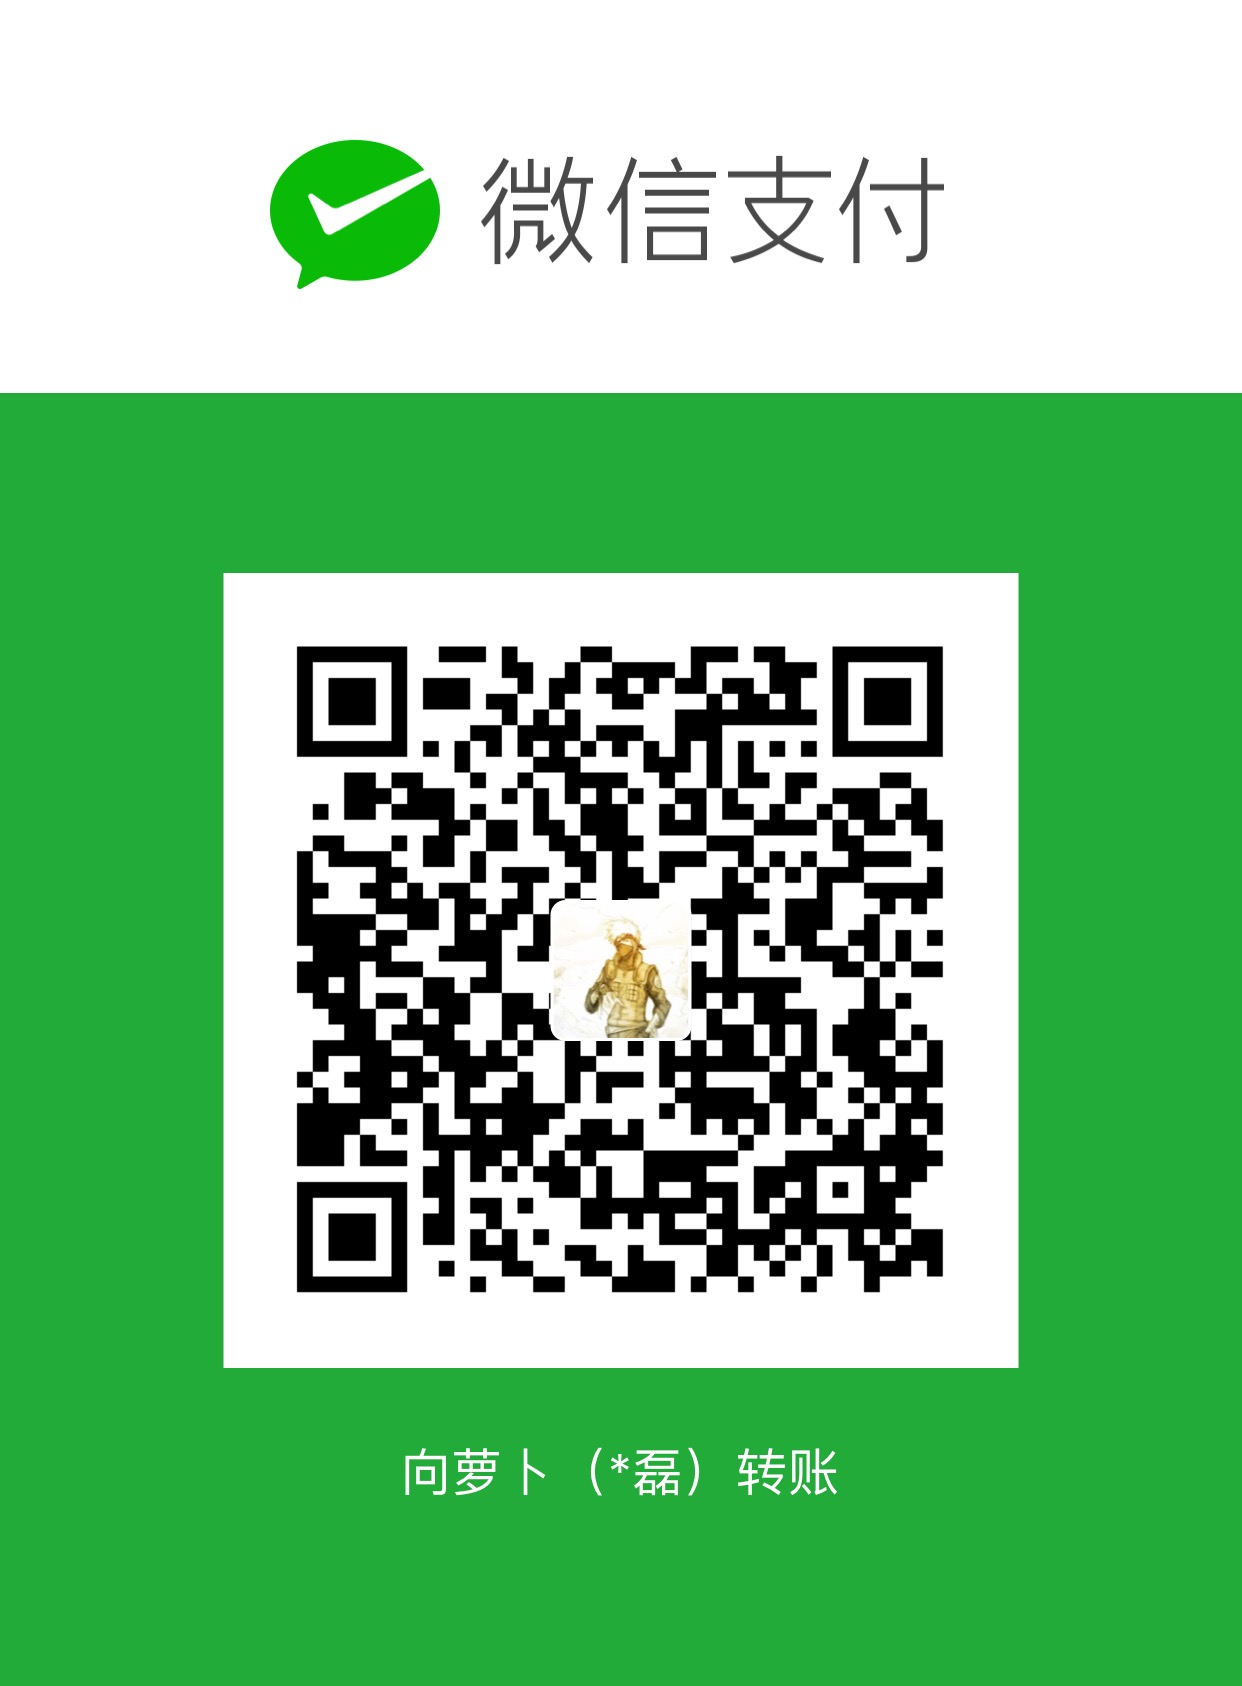 bolei WeChat Pay